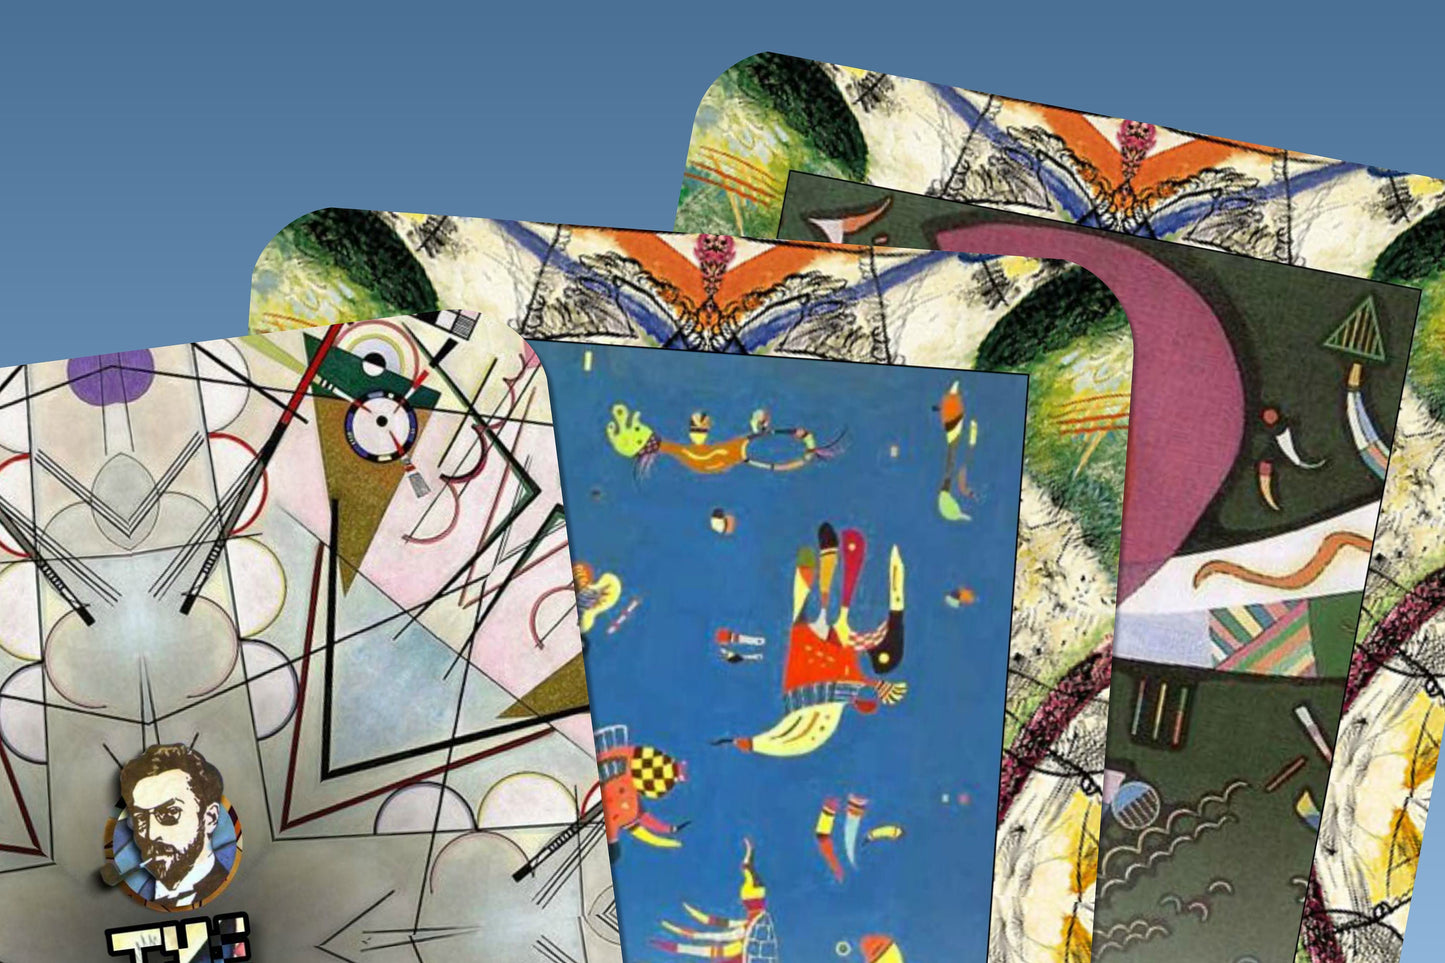 The Kandinsky Tarot - 78 Cards - Wassily Kandinsky